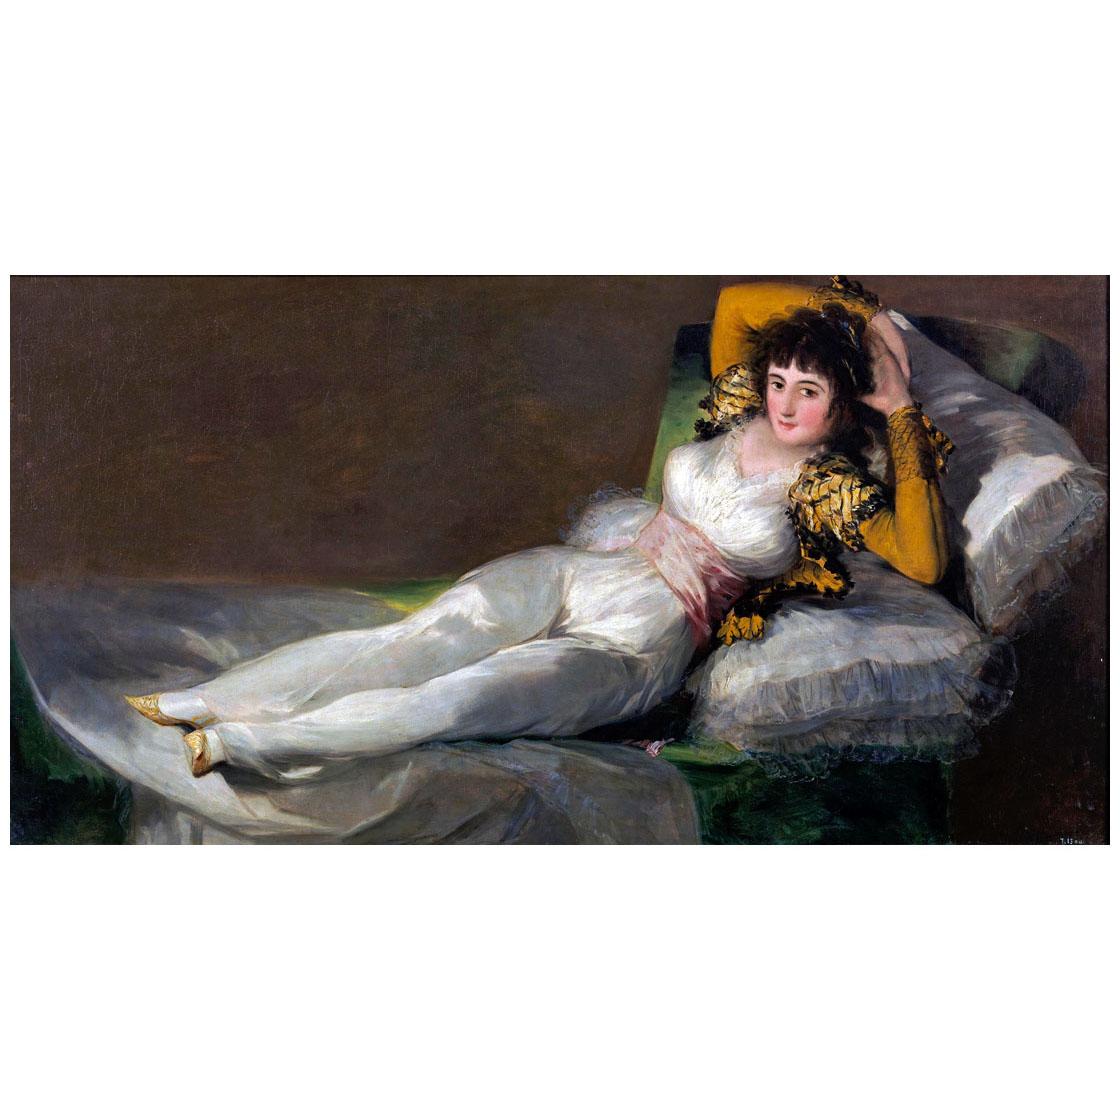 Francisco de Goya. La maja vestida. 1802. Museo del Prado Madrid